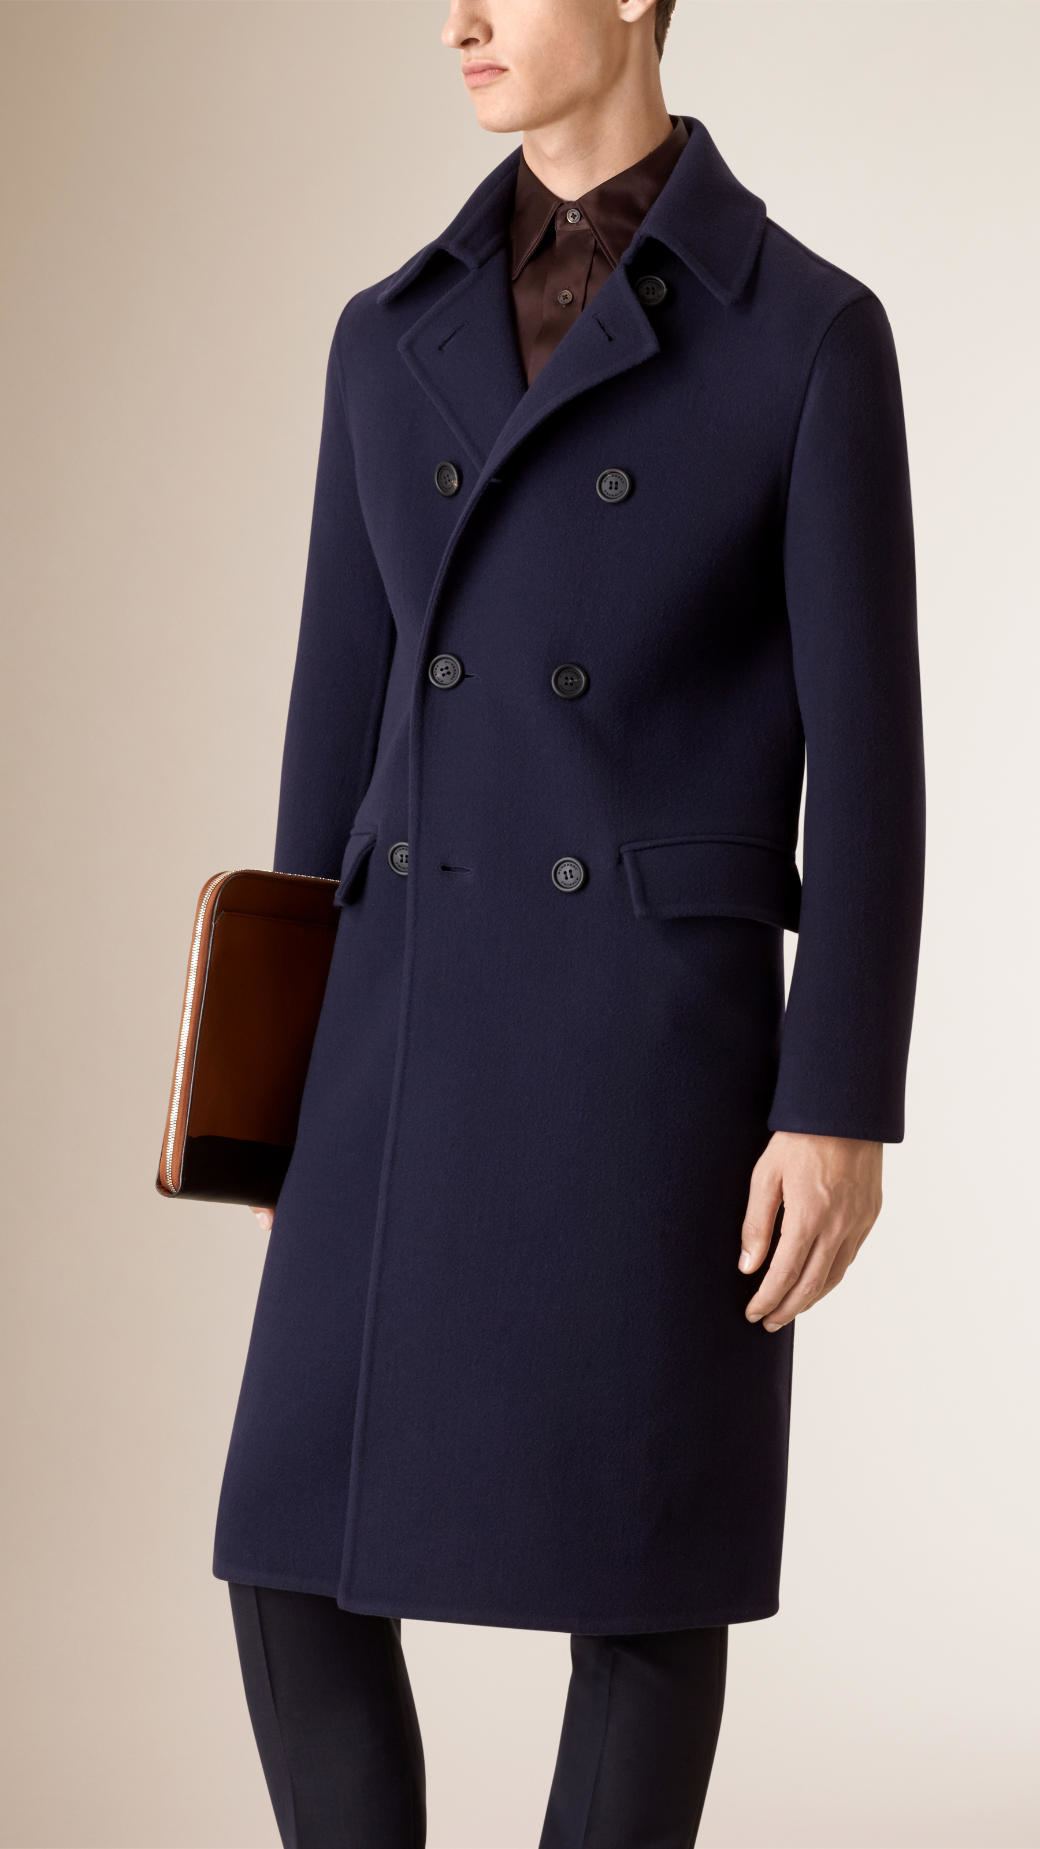 Lyst - Burberry Unlined Wool Overcoat in Blue for Men